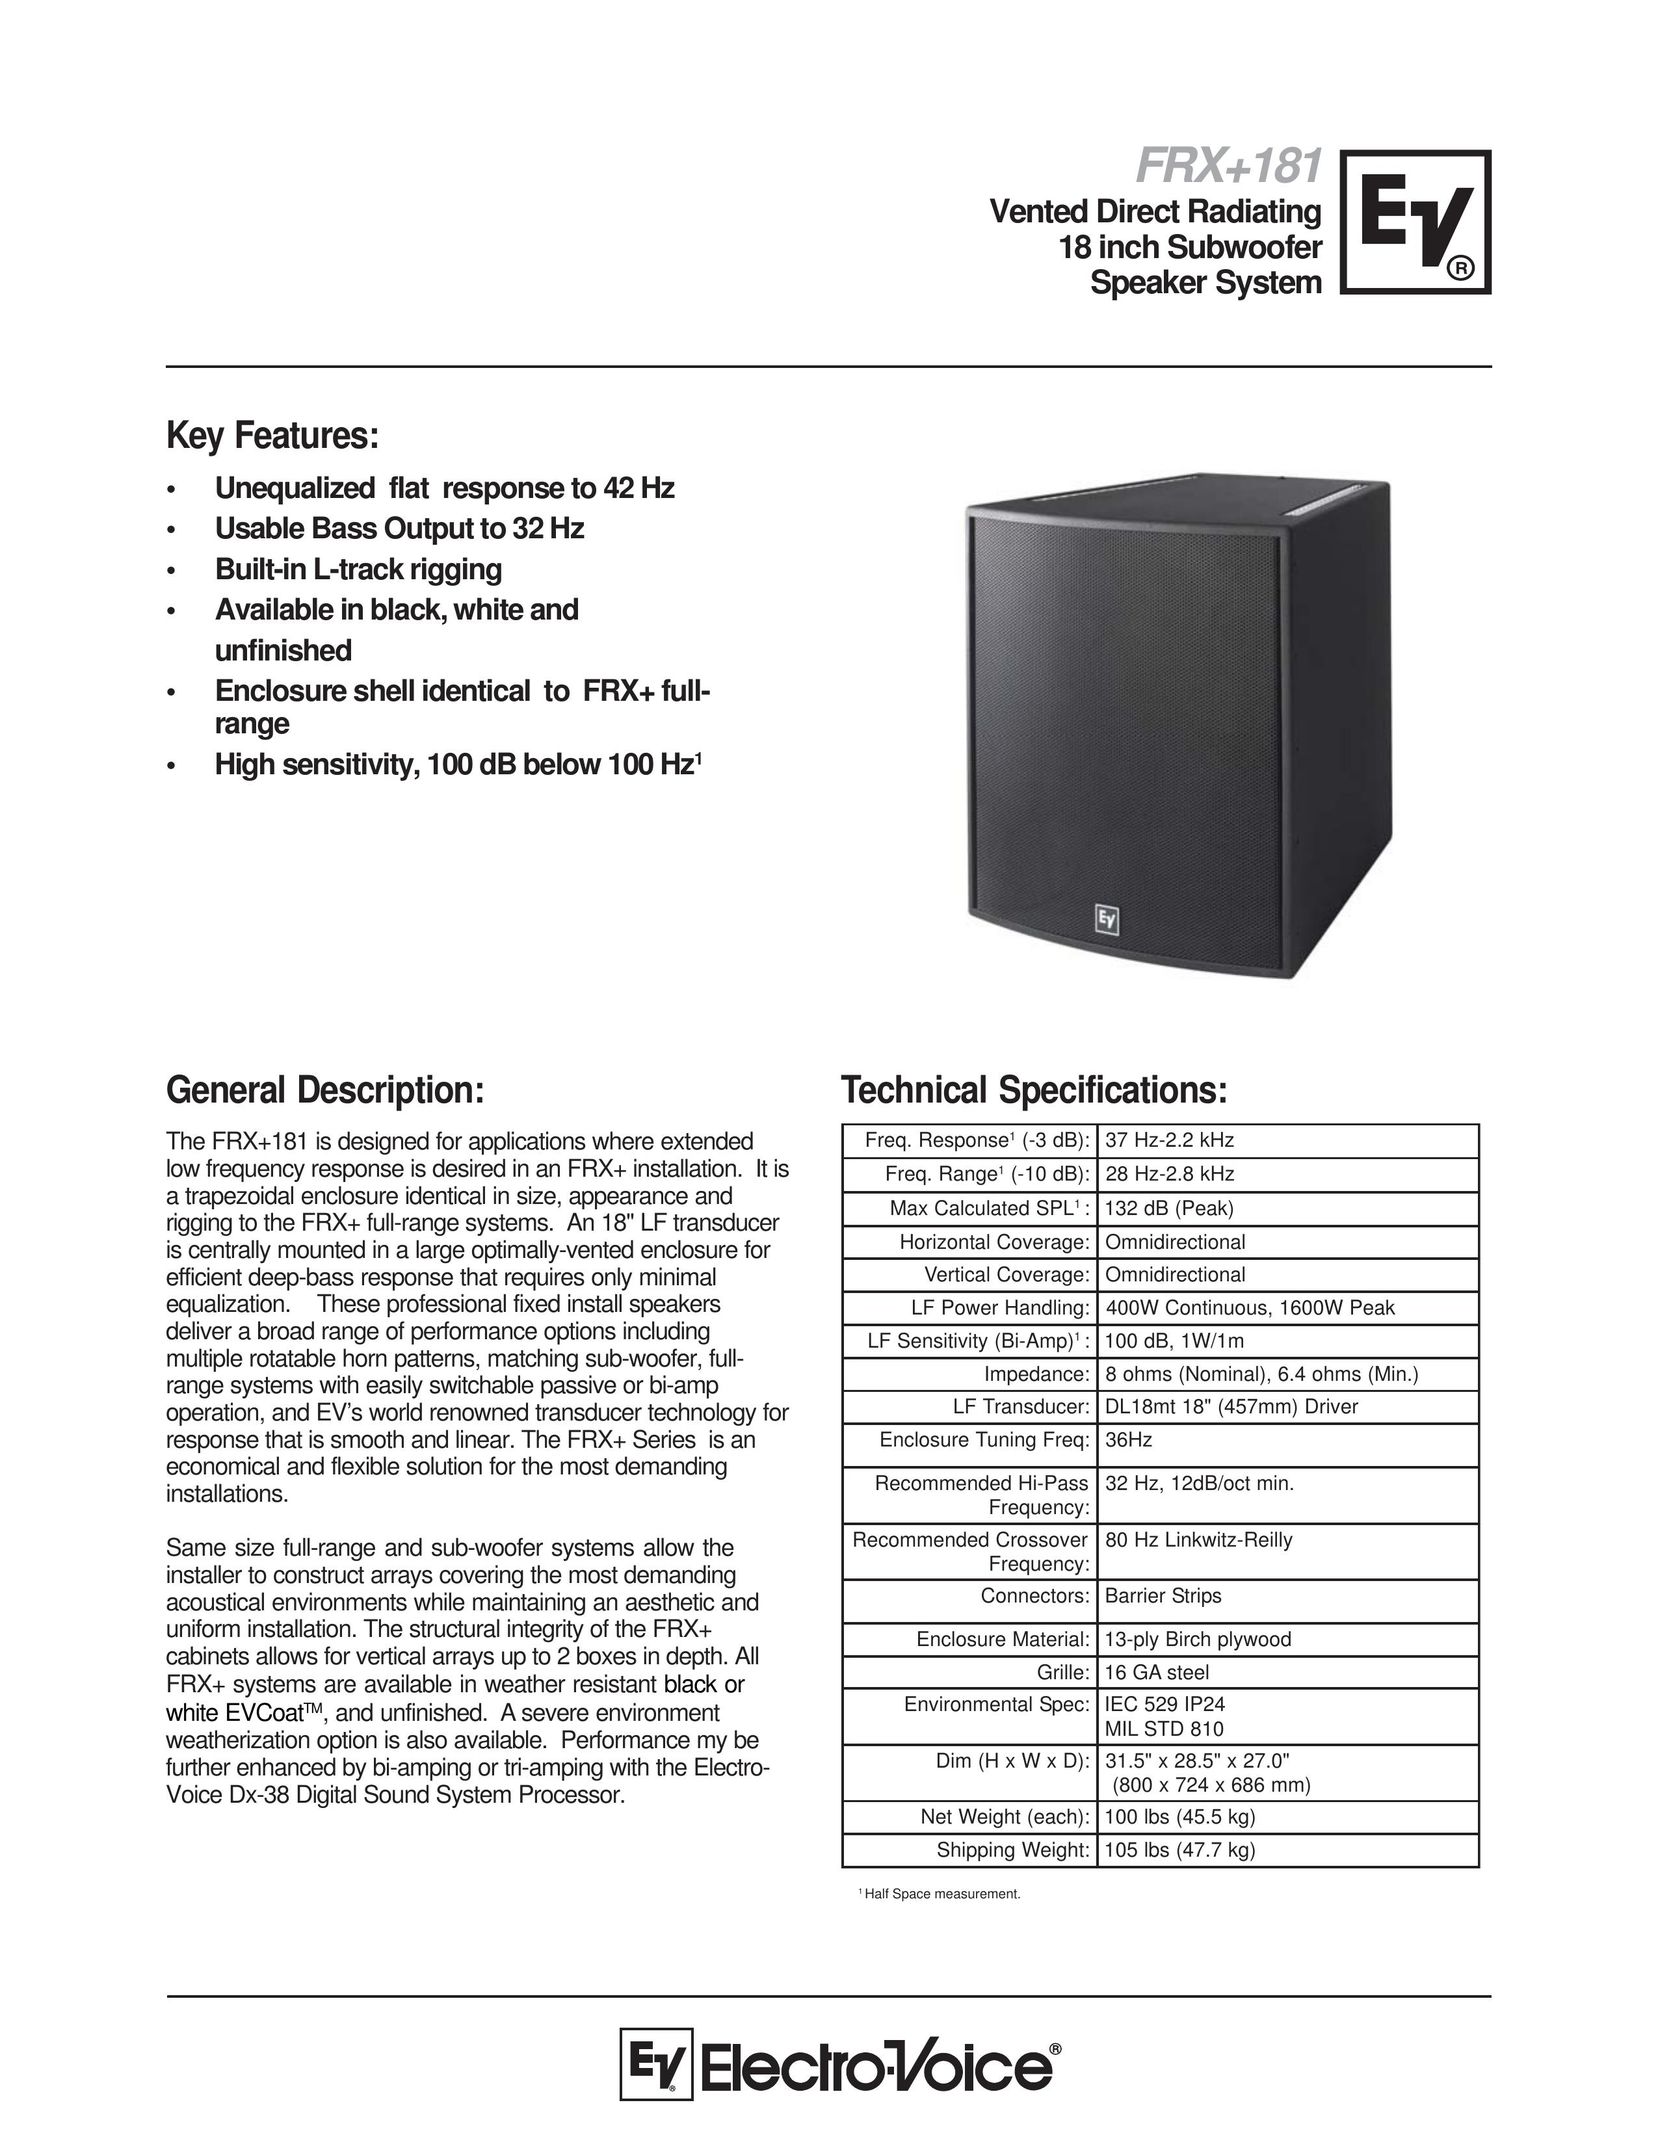 Electro-Voice FRX+181 Speaker System User Manual